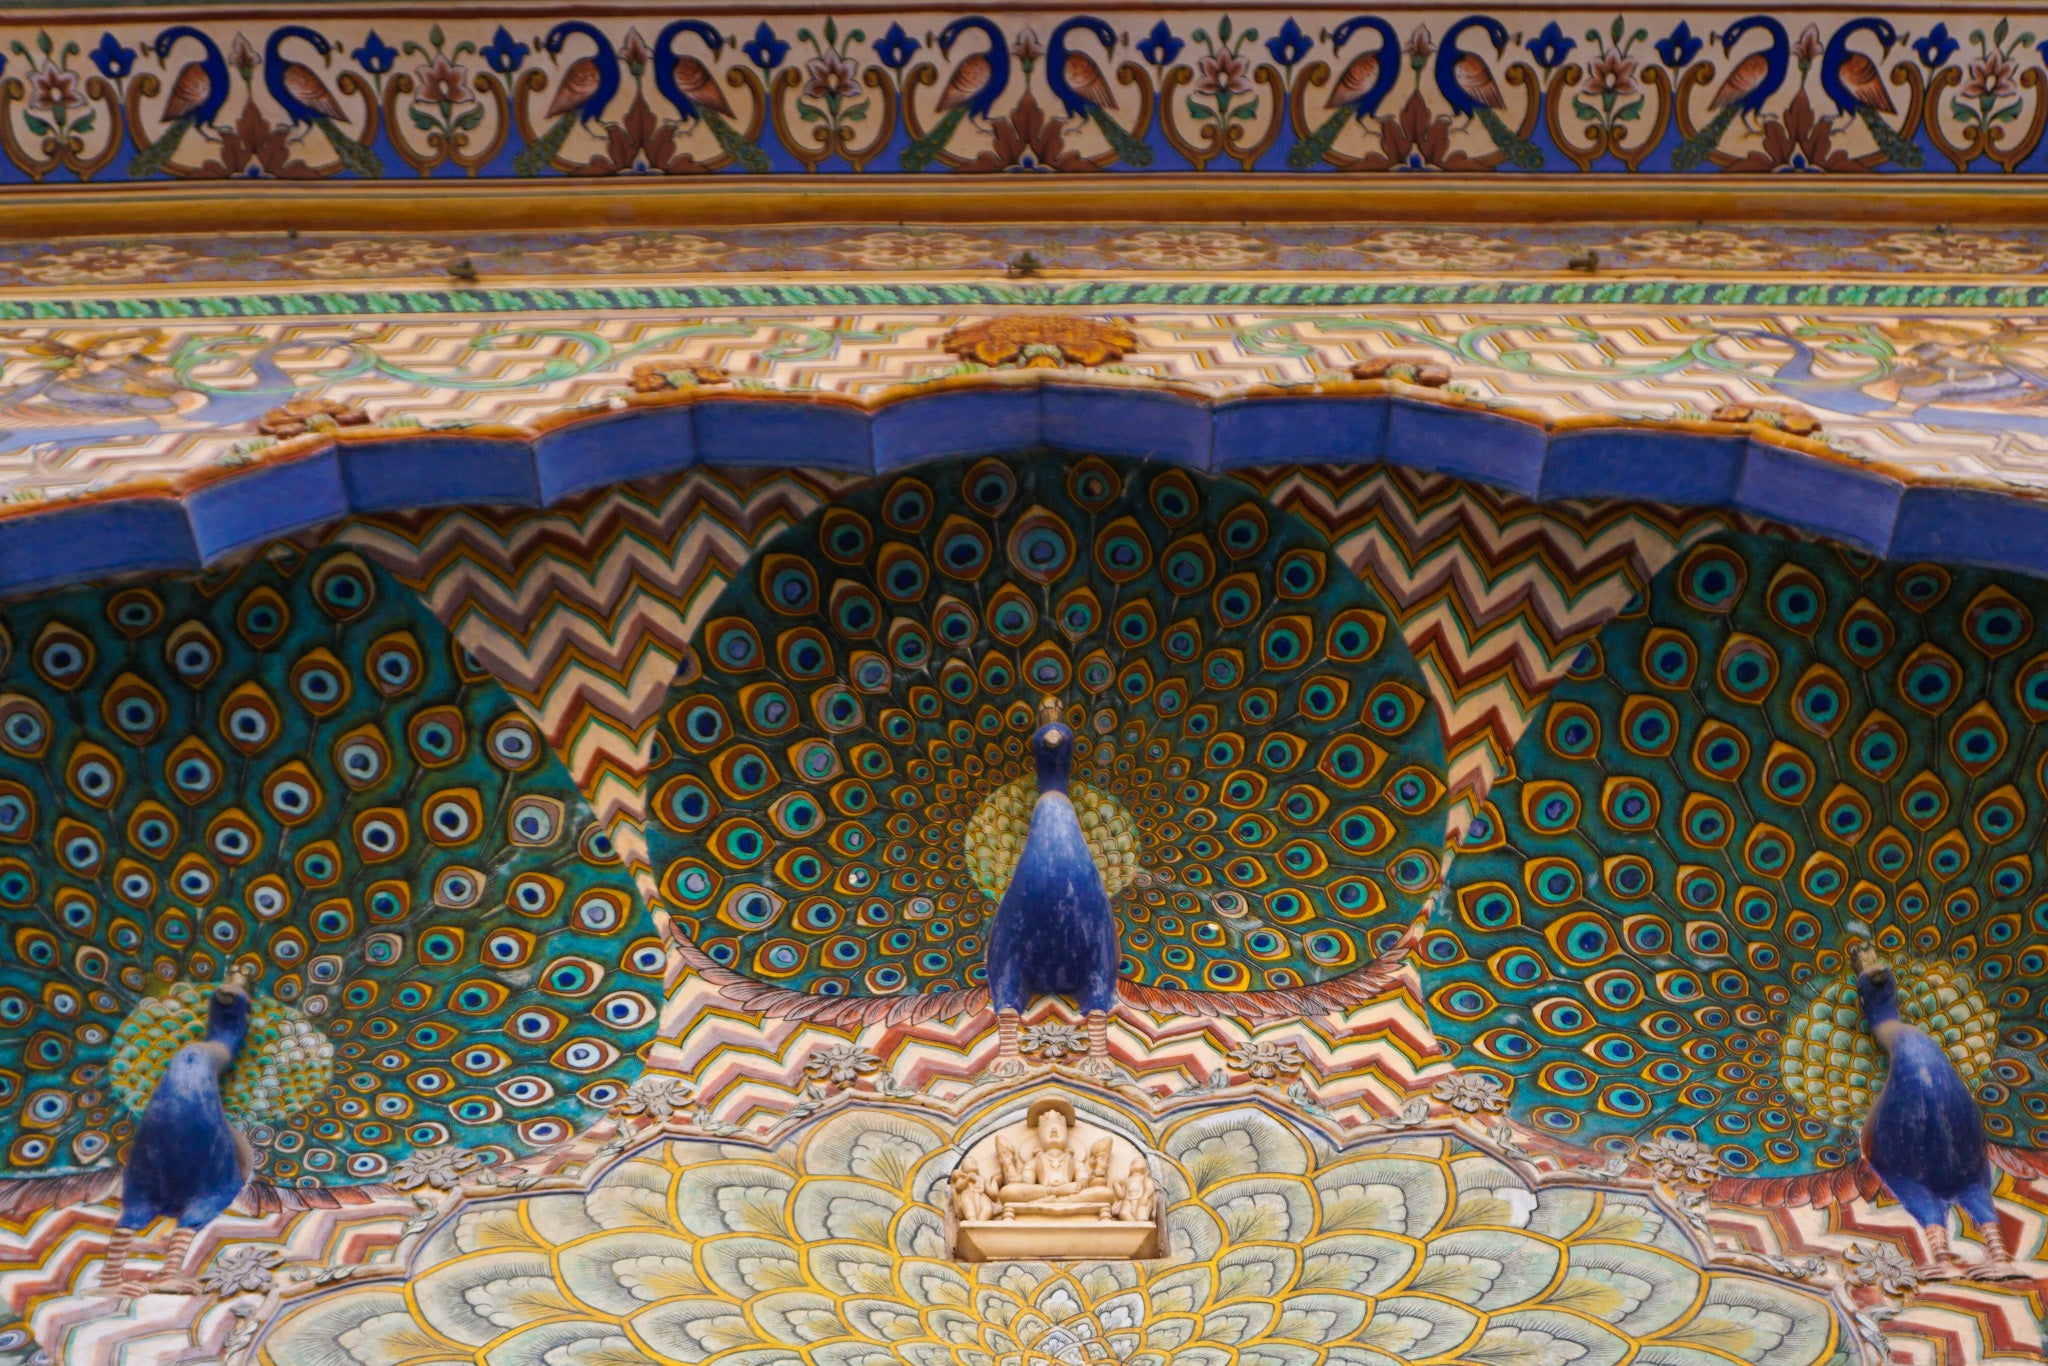 Peacock gate at City Palace Jaipur